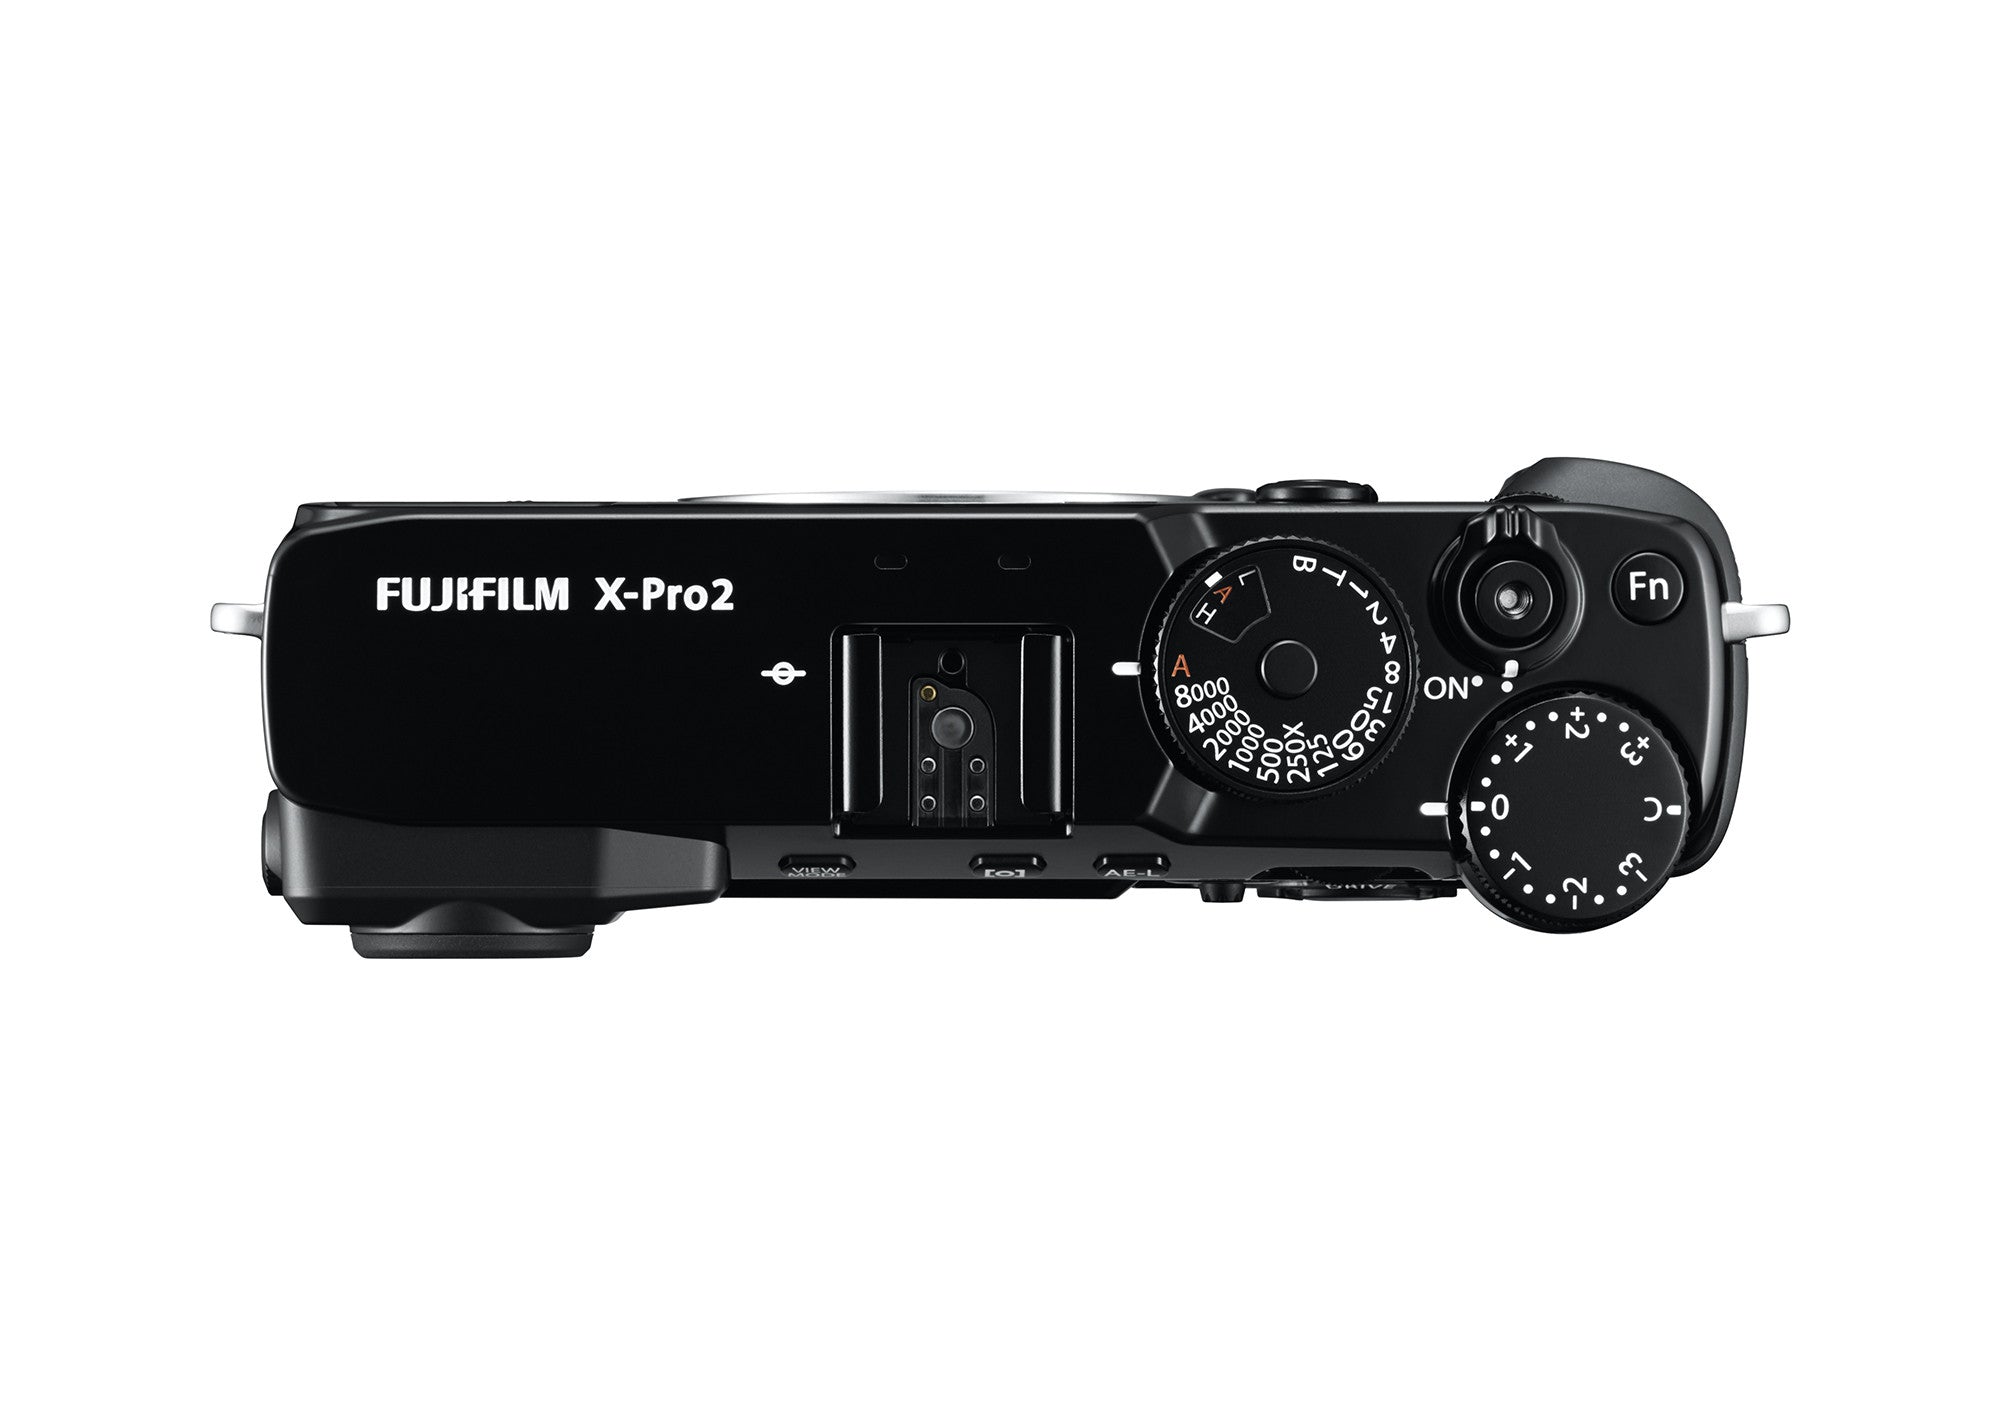 Fujifilm X-Pro2 Digital Camera Body (Black), camera mirrorless cameras, Fujifilm - Pictureline  - 3